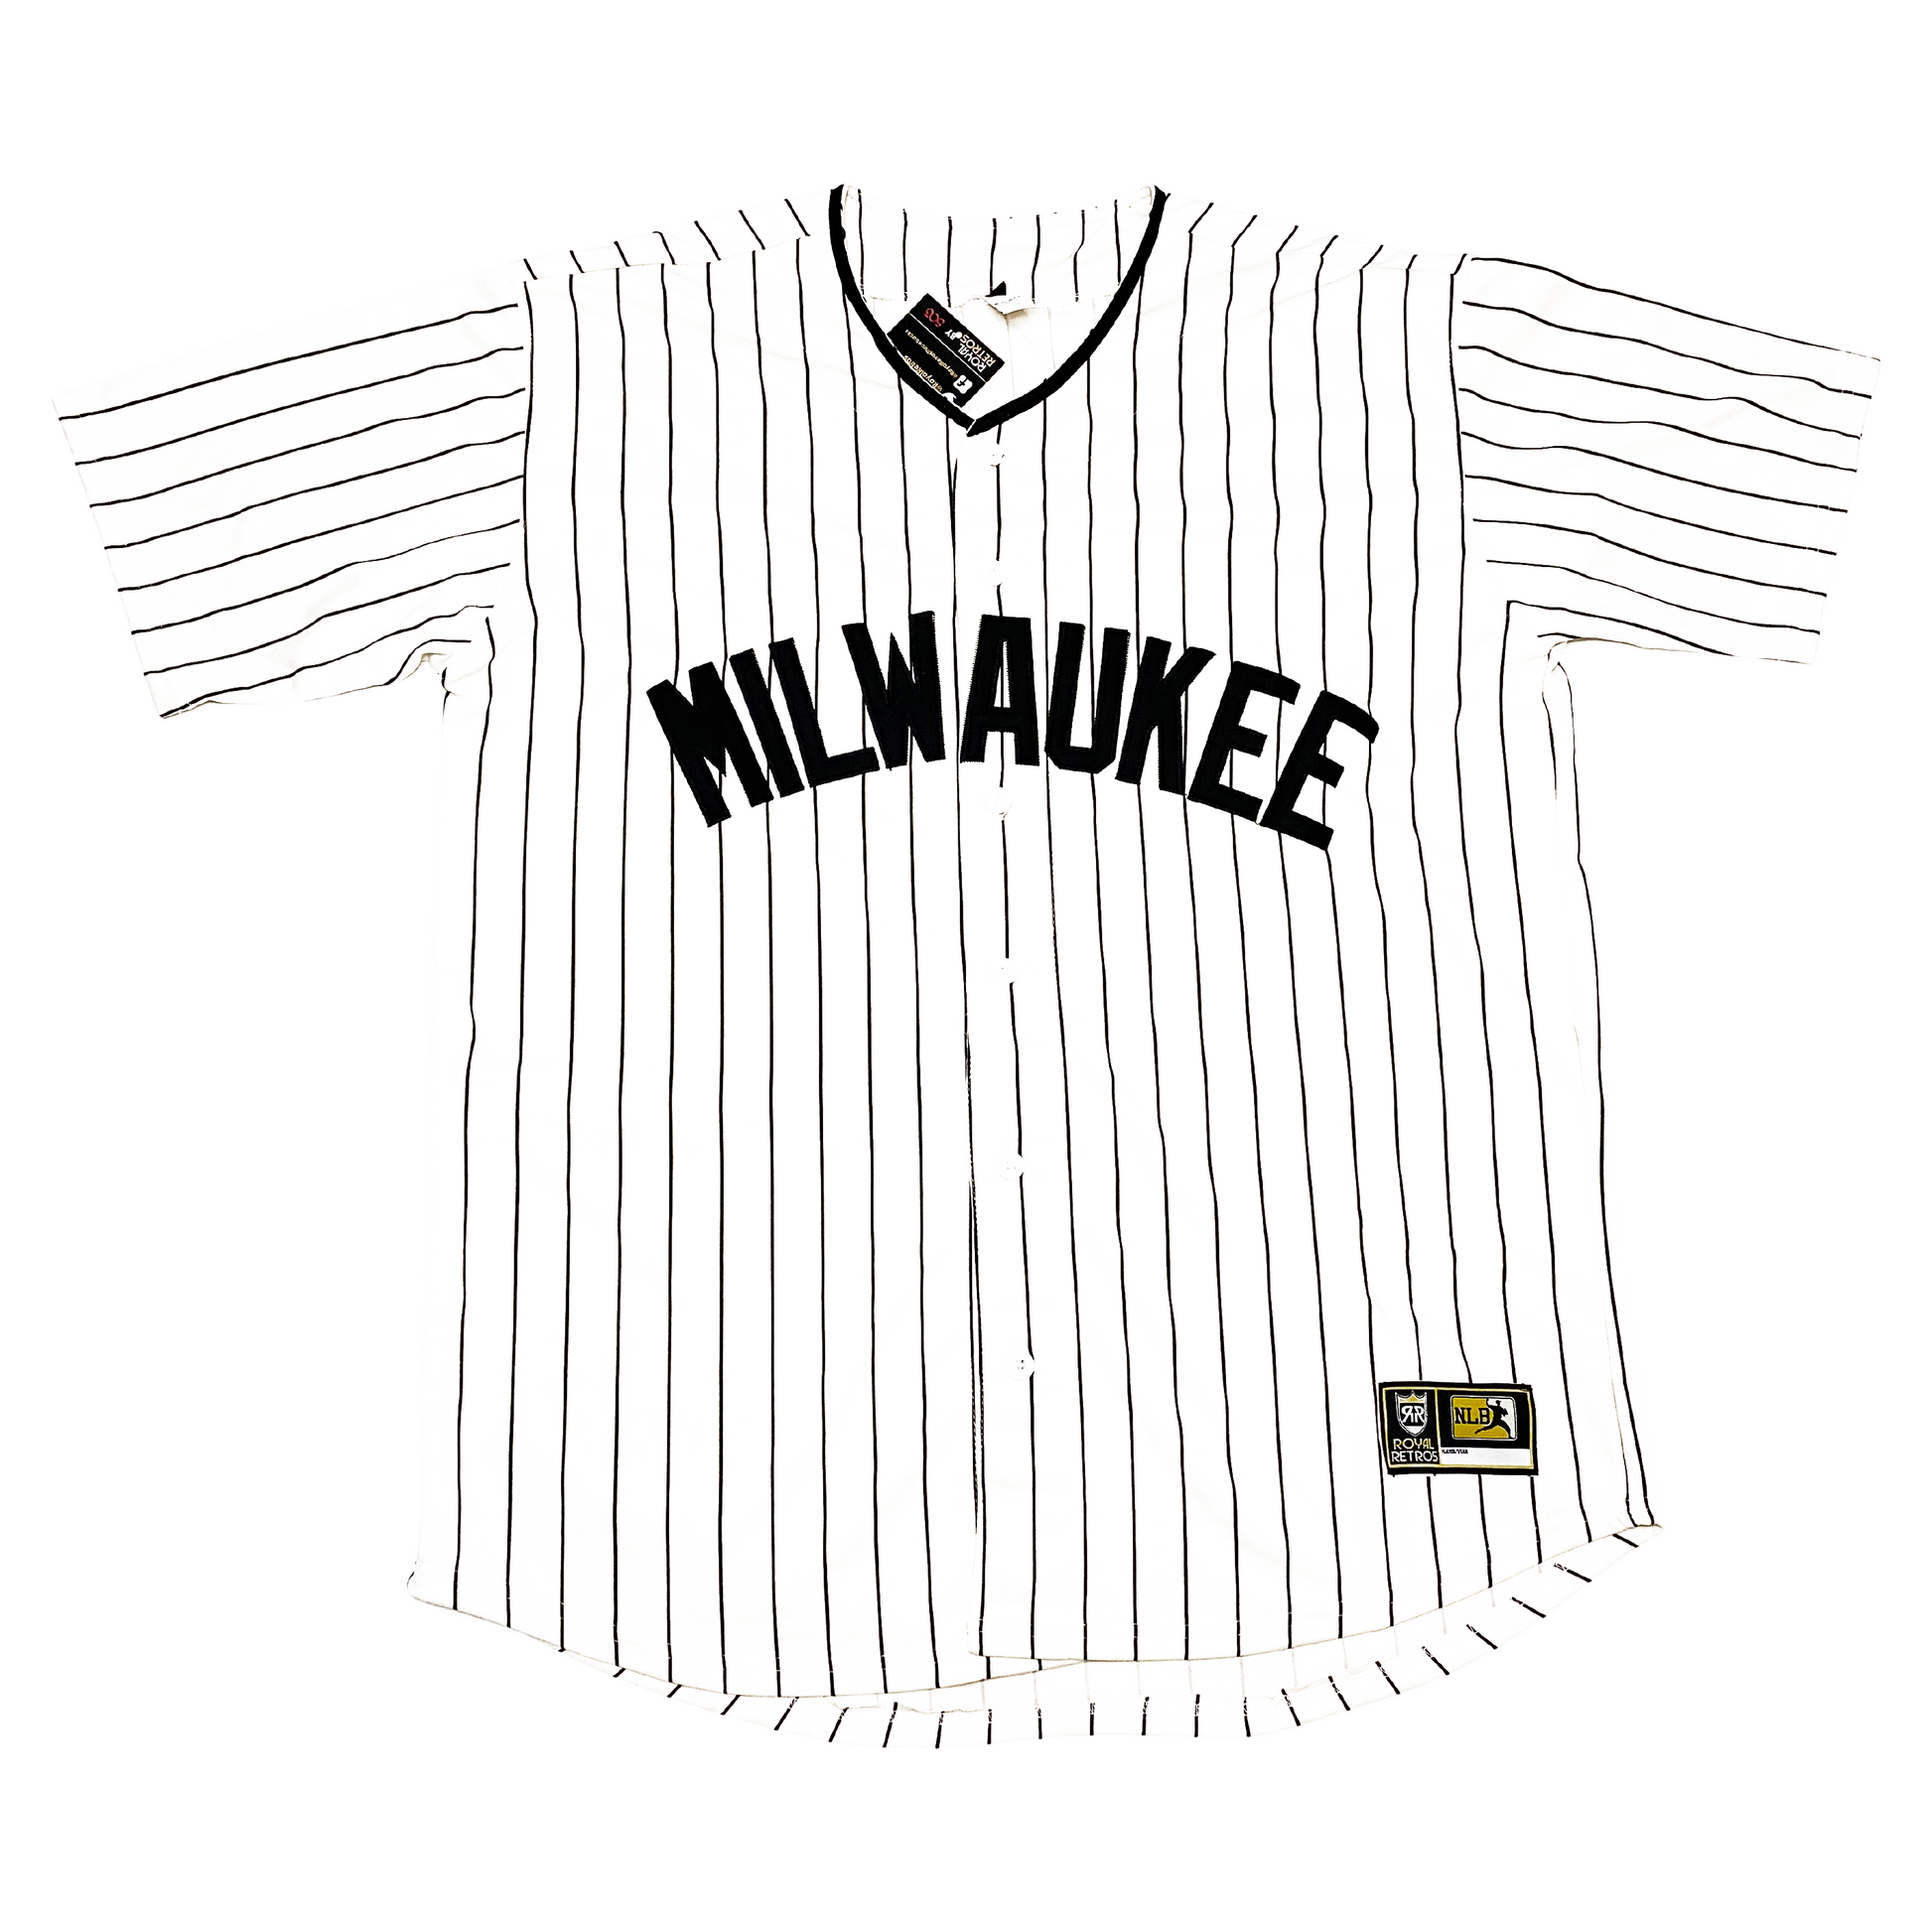 New York Black Yankees NLB Jersey, XL / Cream